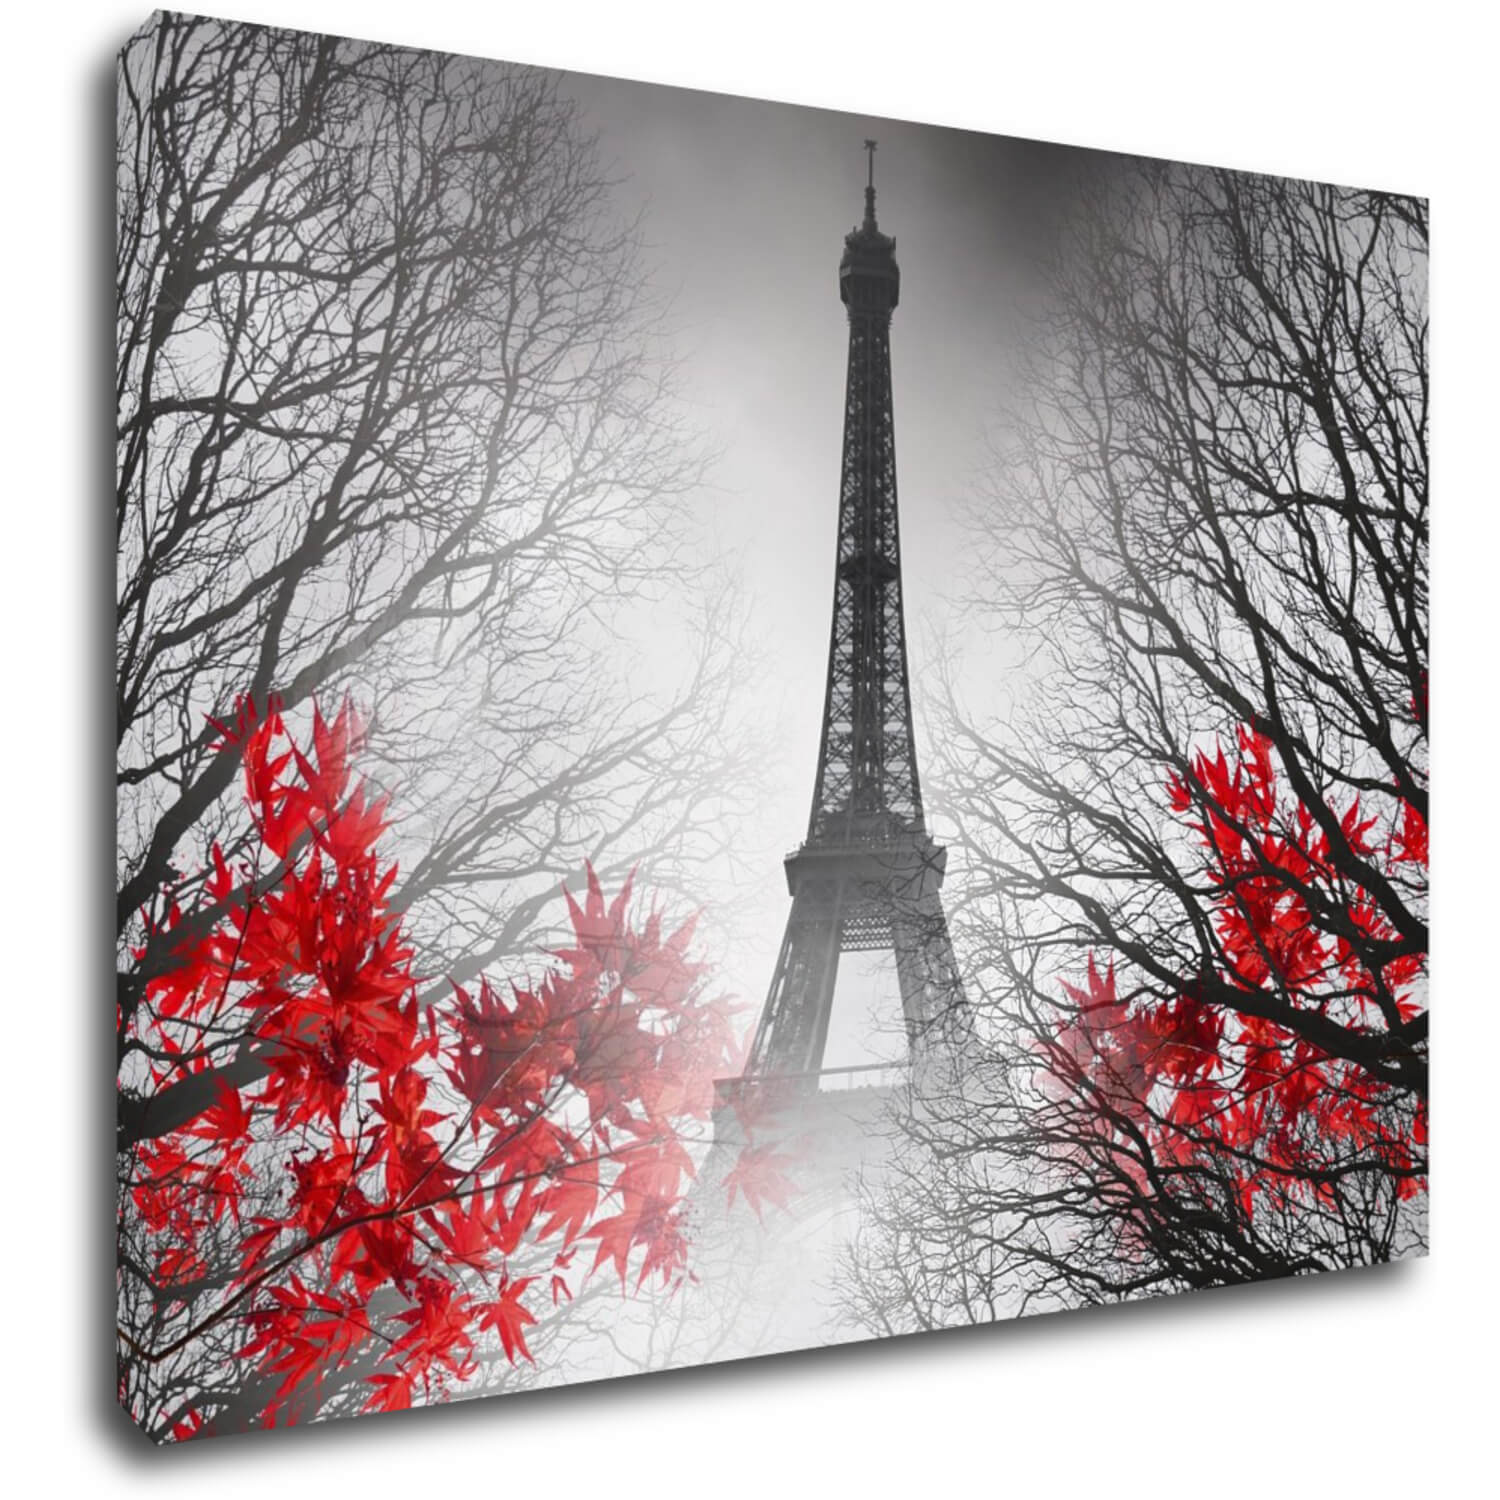 Obraz Eiffelova věž černobílá s červeným detailem - 70 x 50 cm